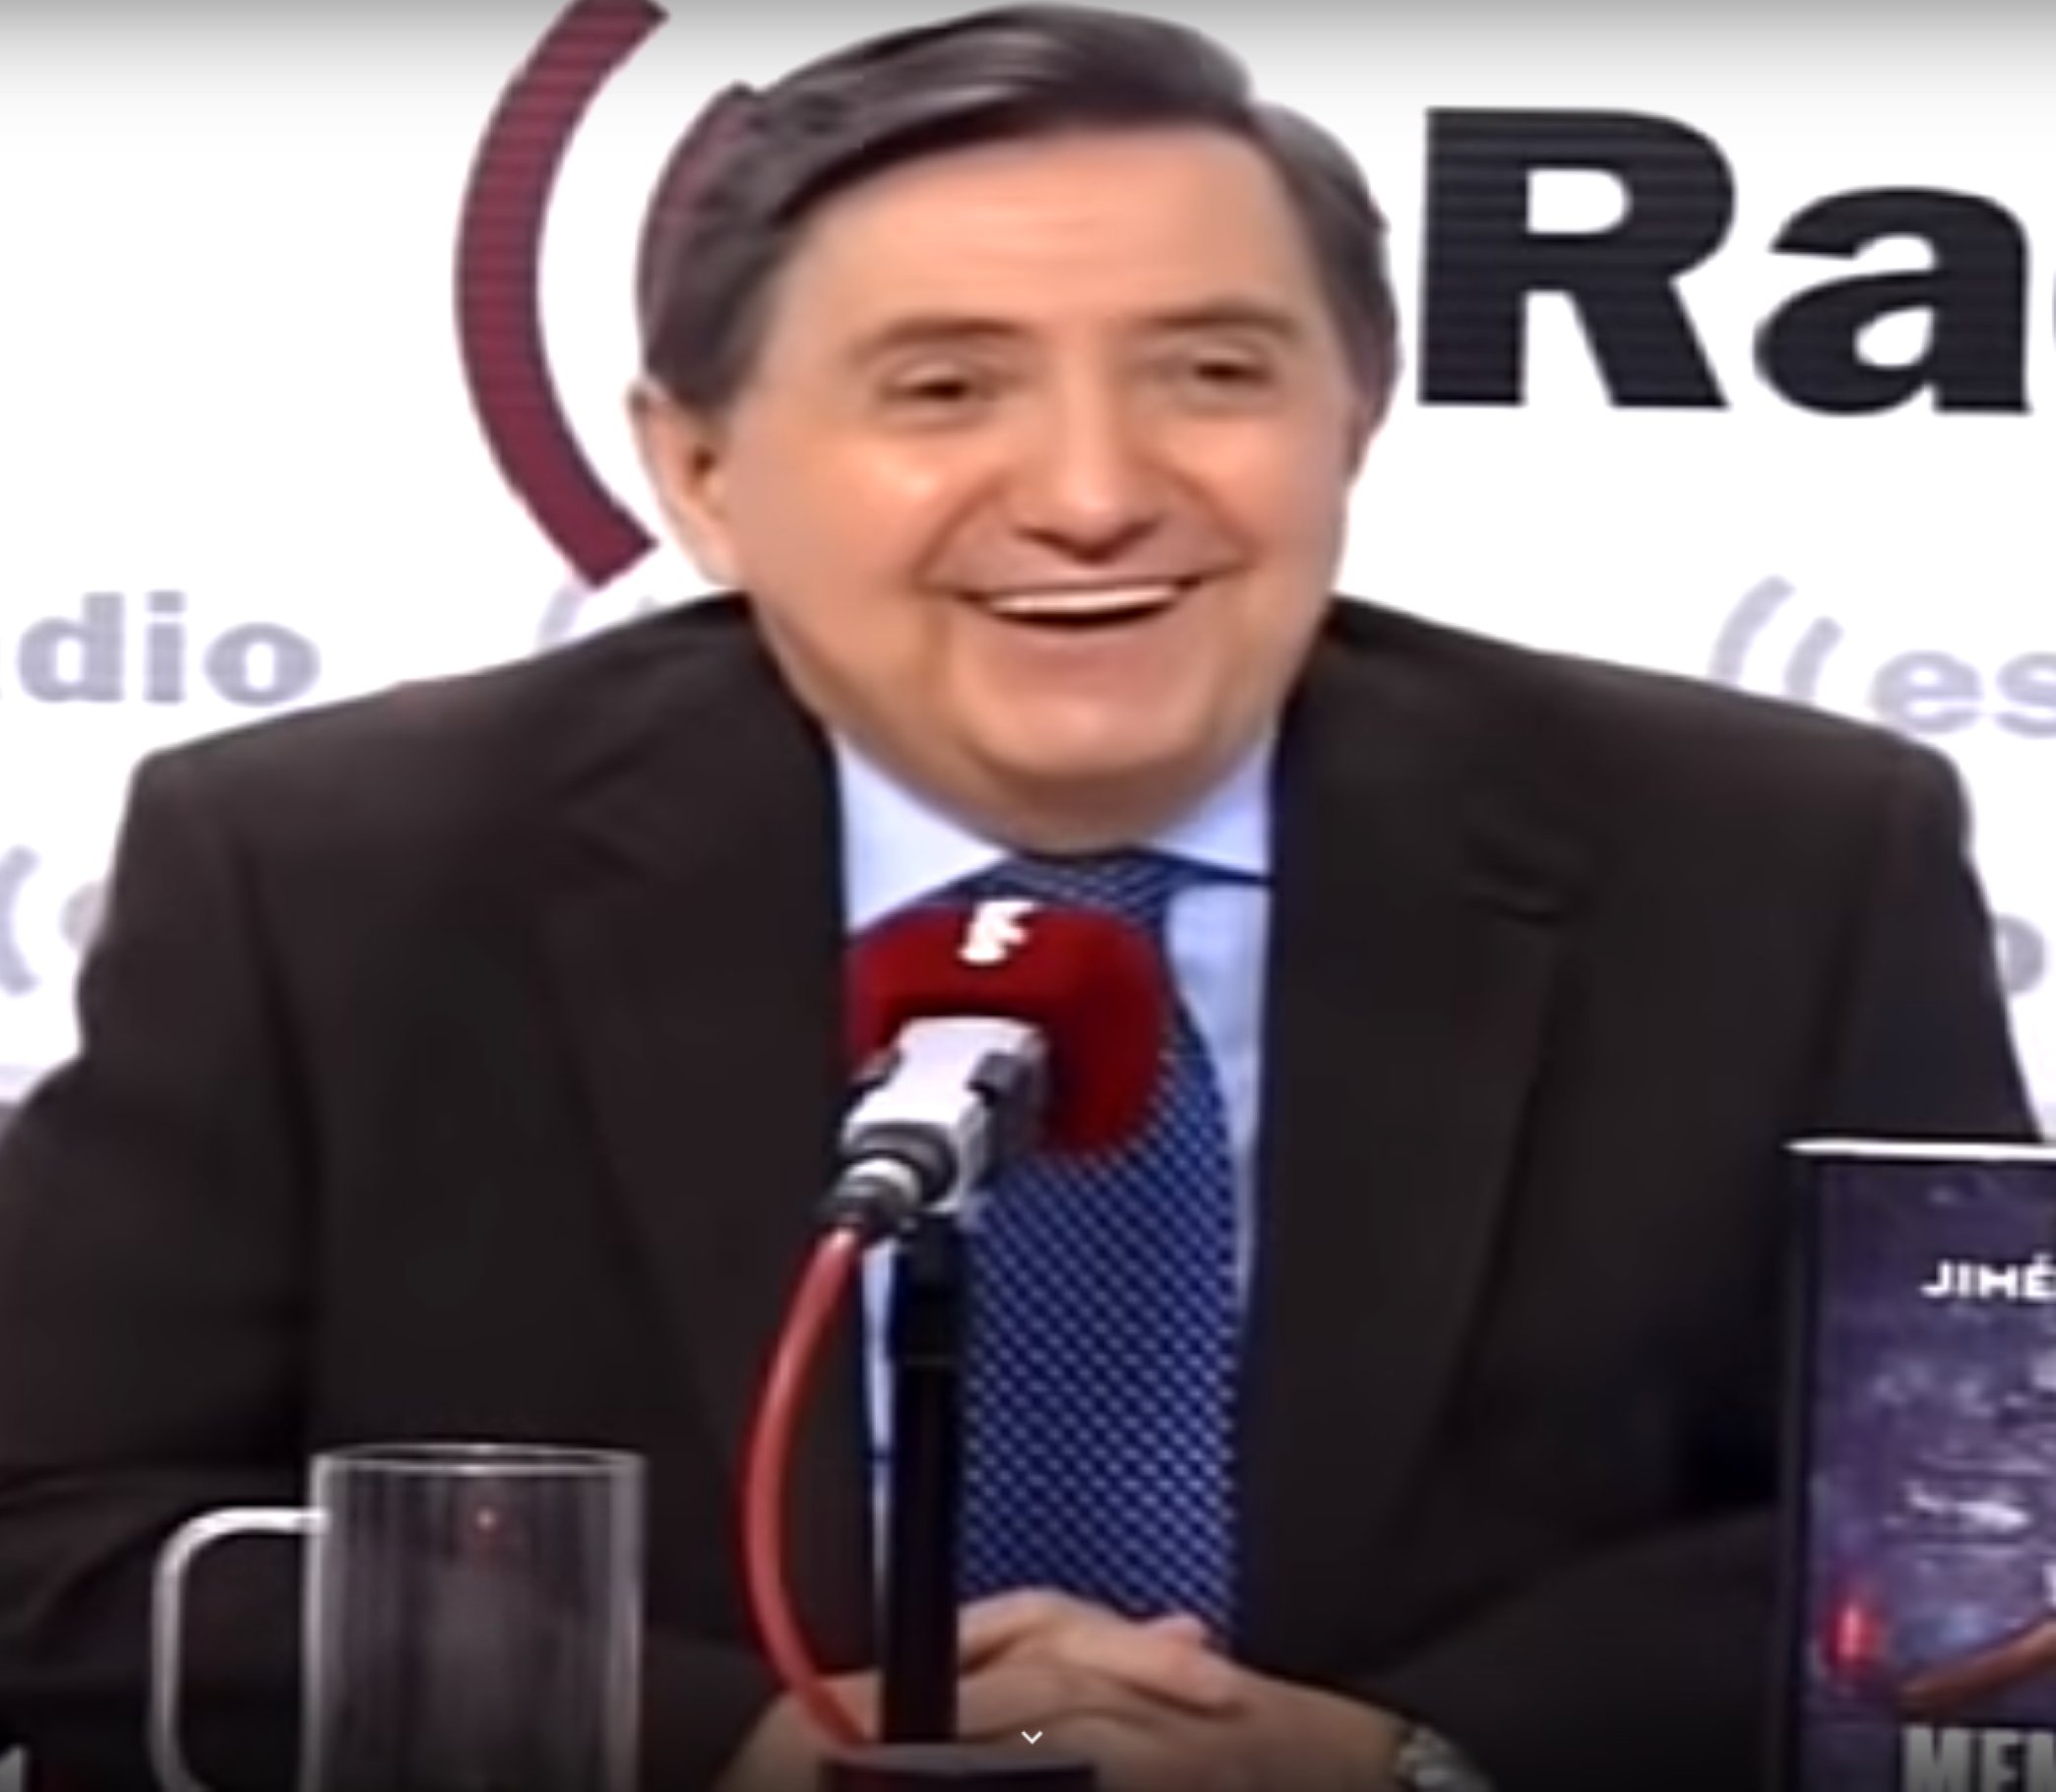 Jiménez Losantos ridiculiza a un líder de VOX: "No te llega el riego al cerebro"